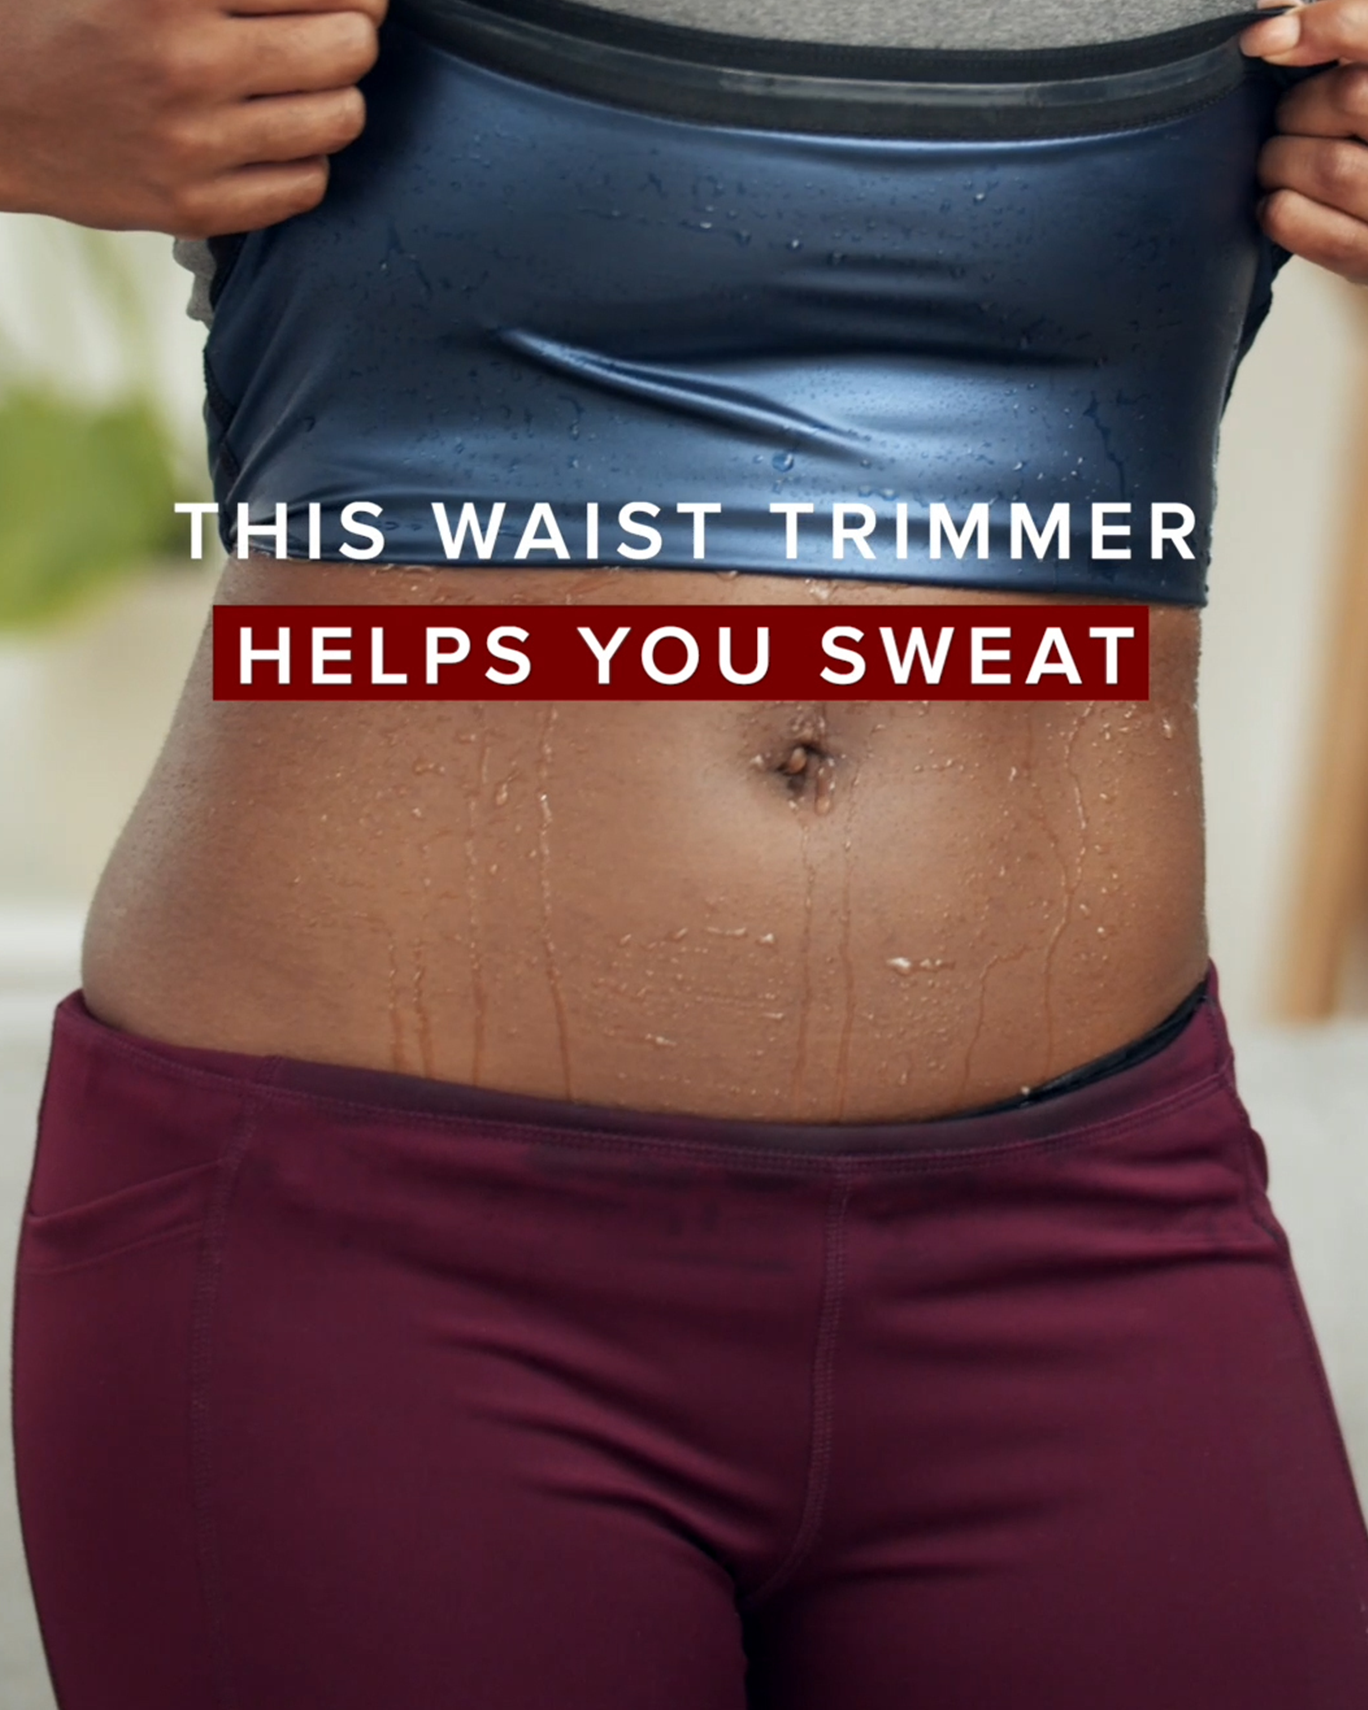 Women Waist Trainer Cincher 3 Straps - Tummy Control Sweat Girdle Workout  Slim Belly Band for Weight Loss - 2XS, Hooks + 3 Belts Sweat Waist Trainer,  XXL price in UAE,  UAE